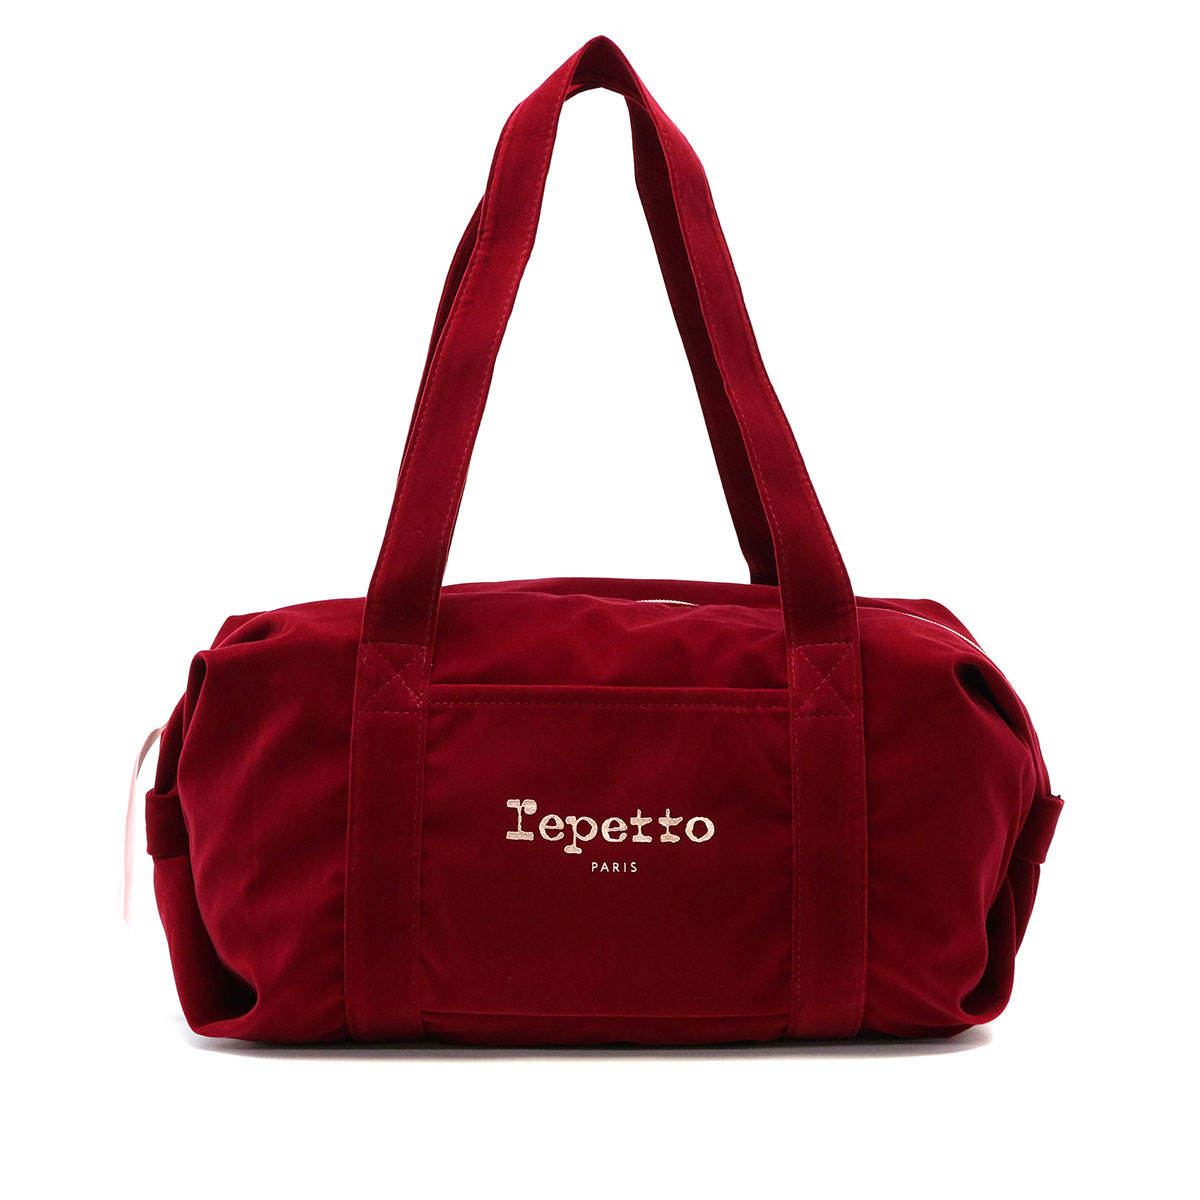 Repetto レペット Duffle bag size M ボストンバッグ 51204551232